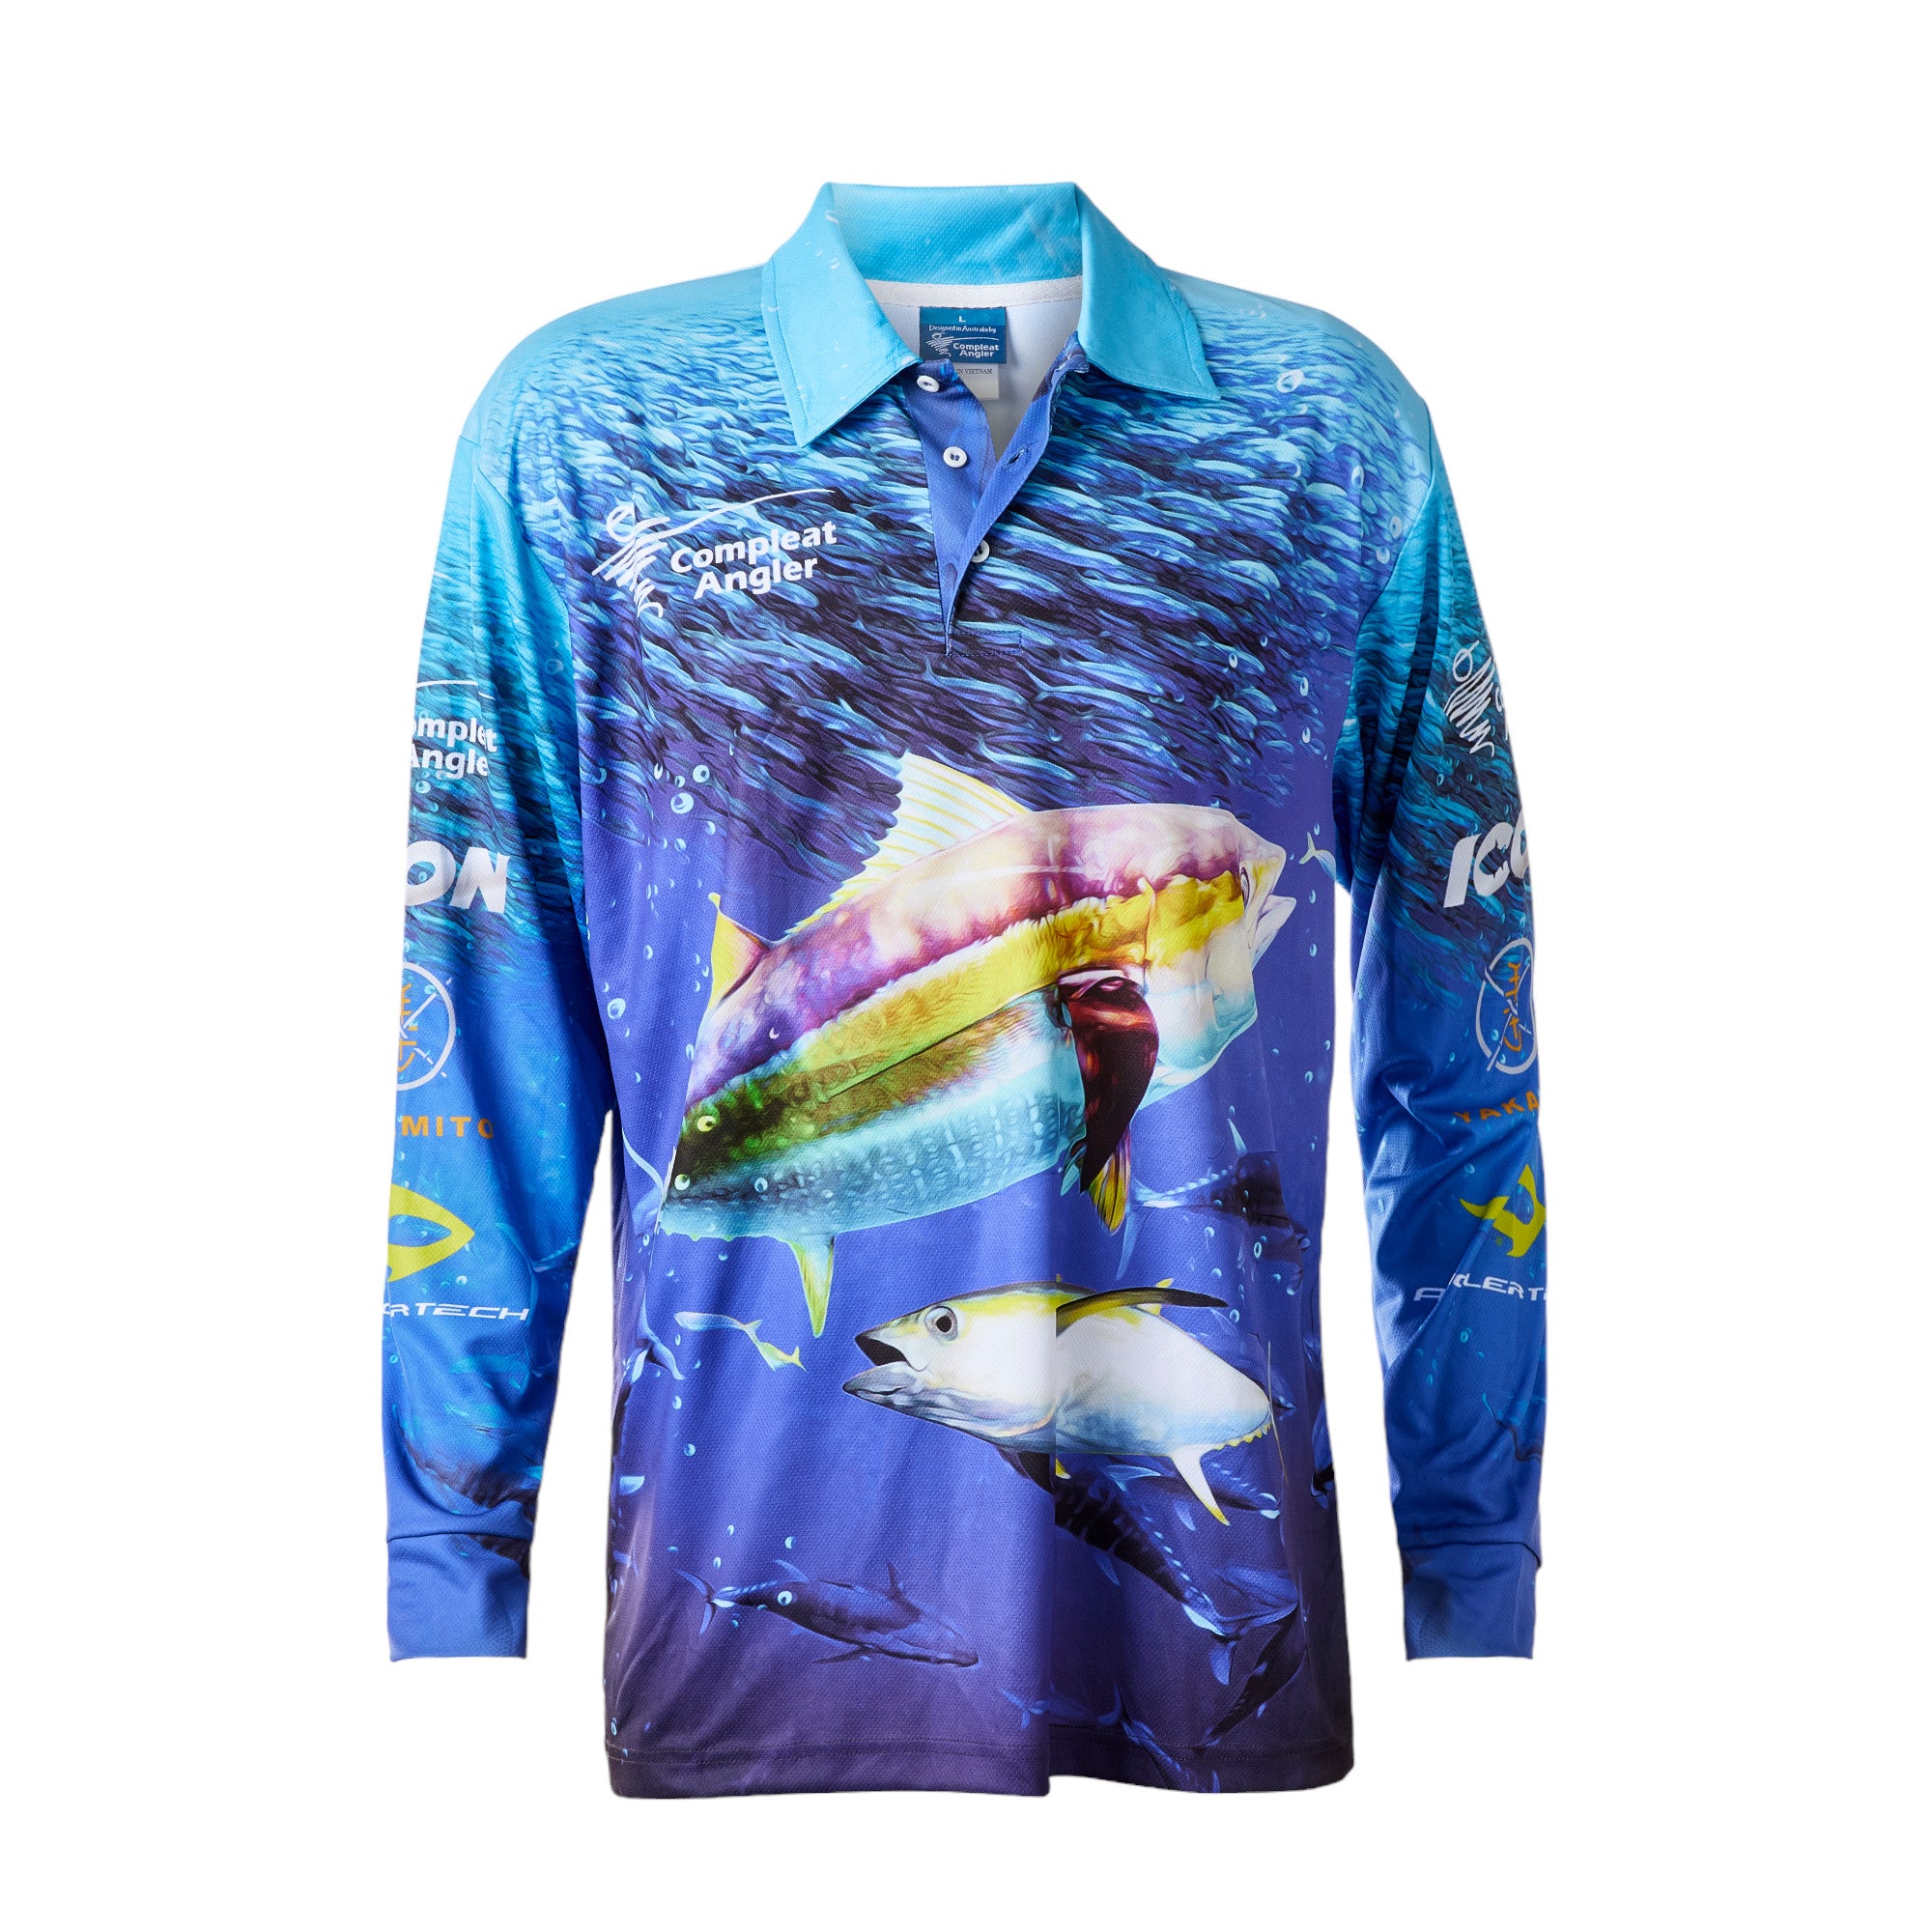 Compleat Angler Tuna Tournament Kids Shirt